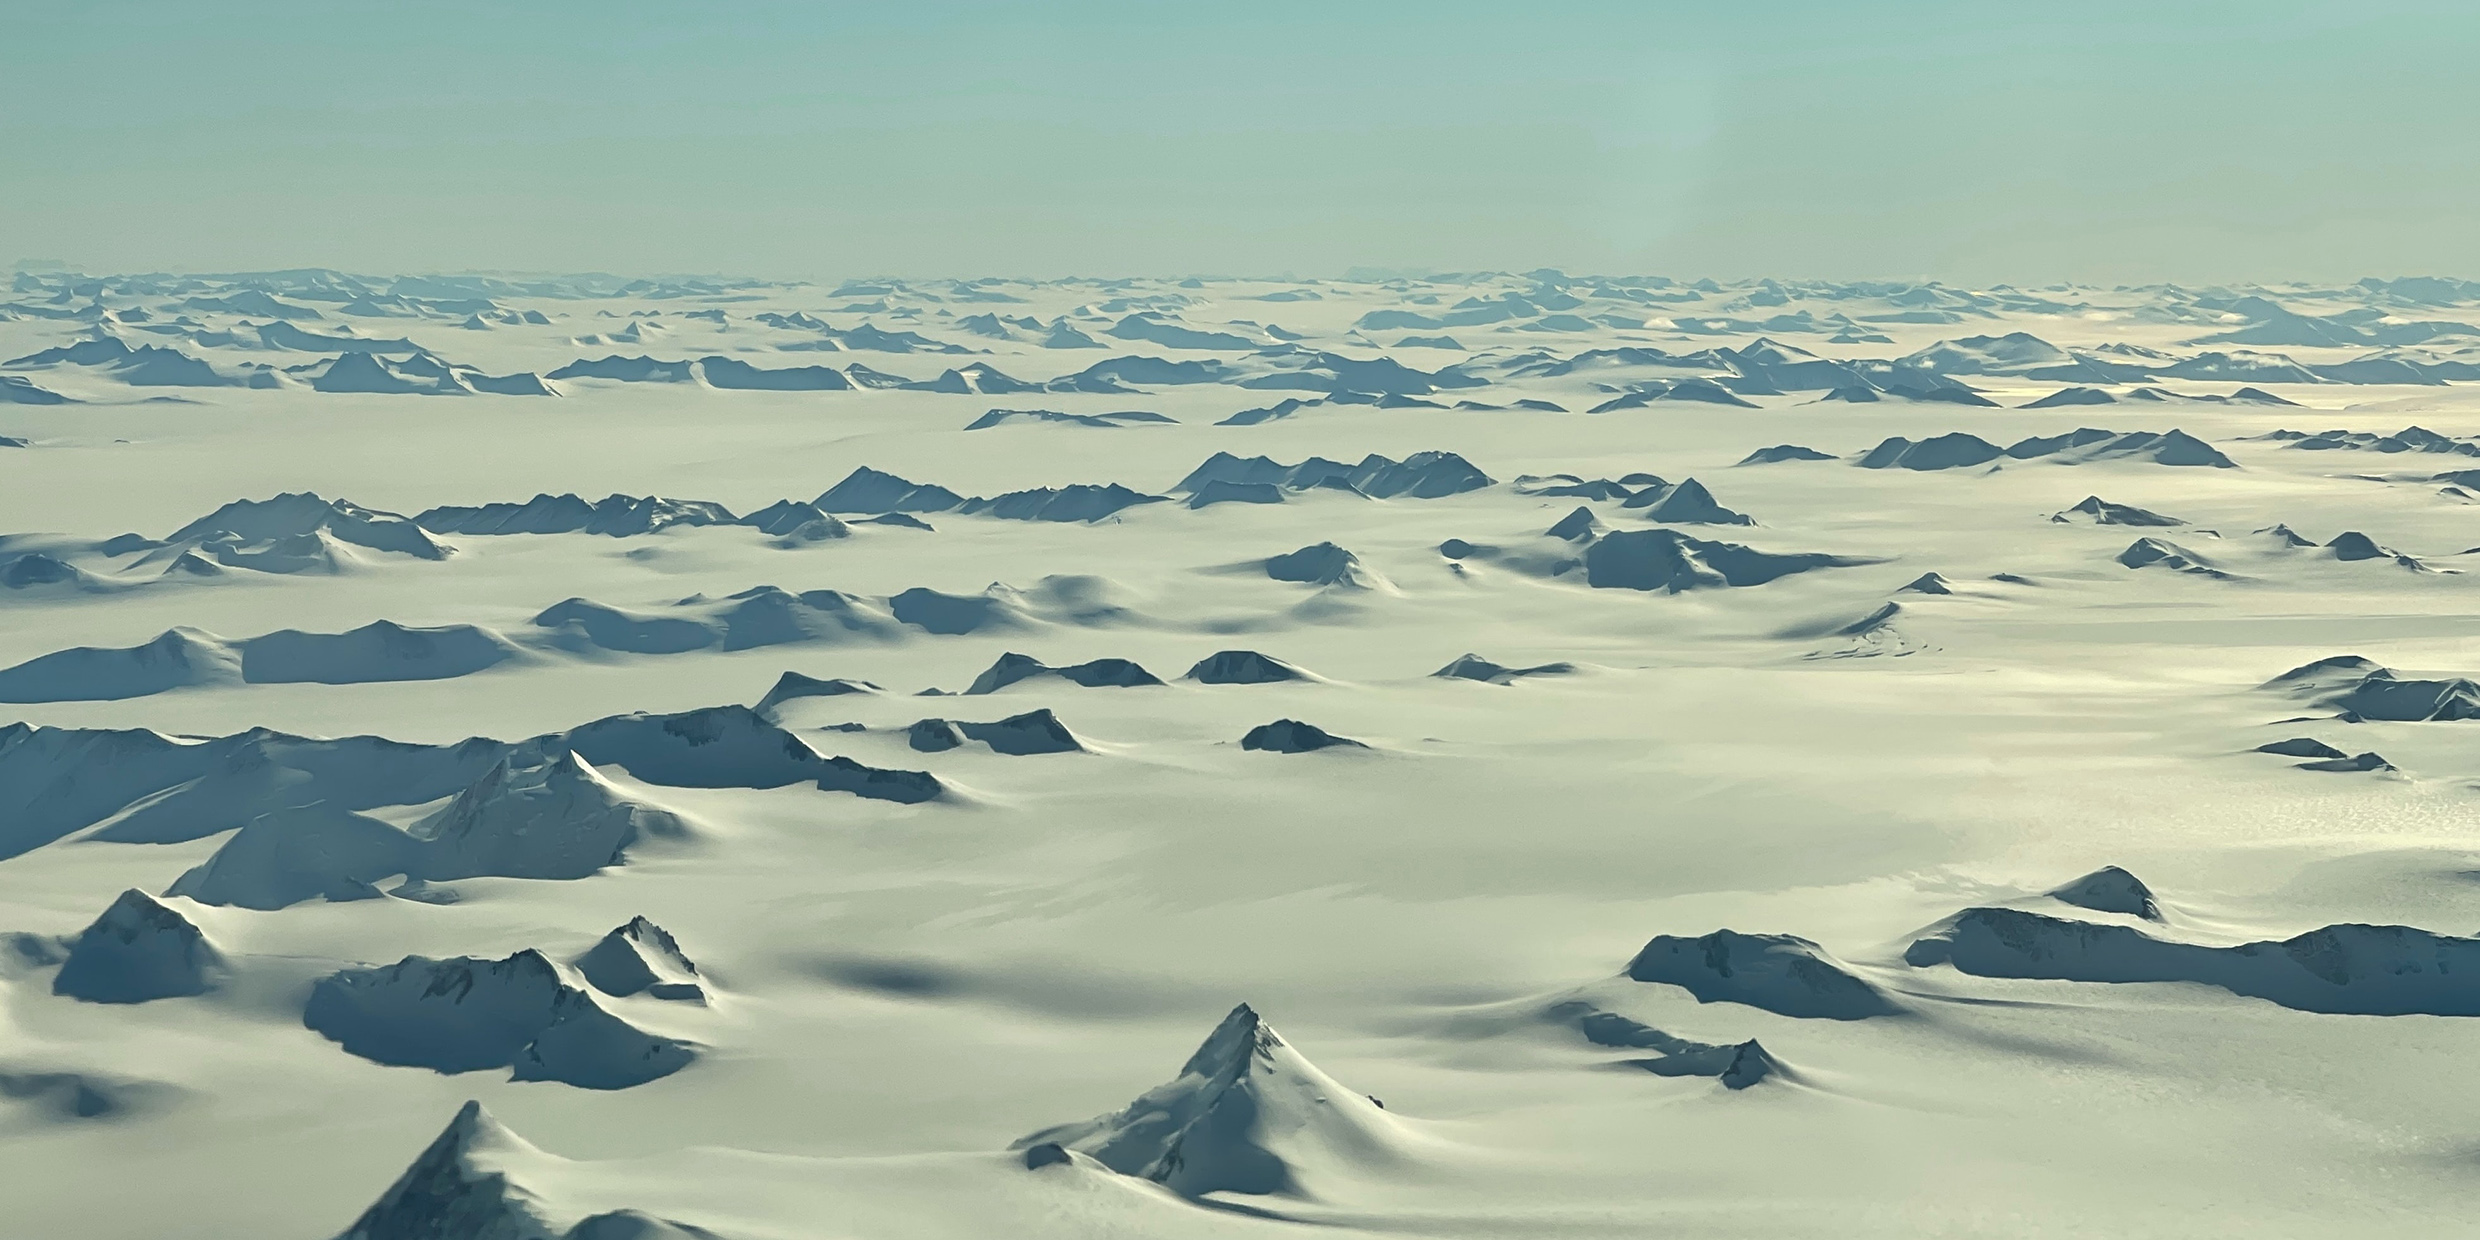 Aerial photo of a barren Antarctic landscape